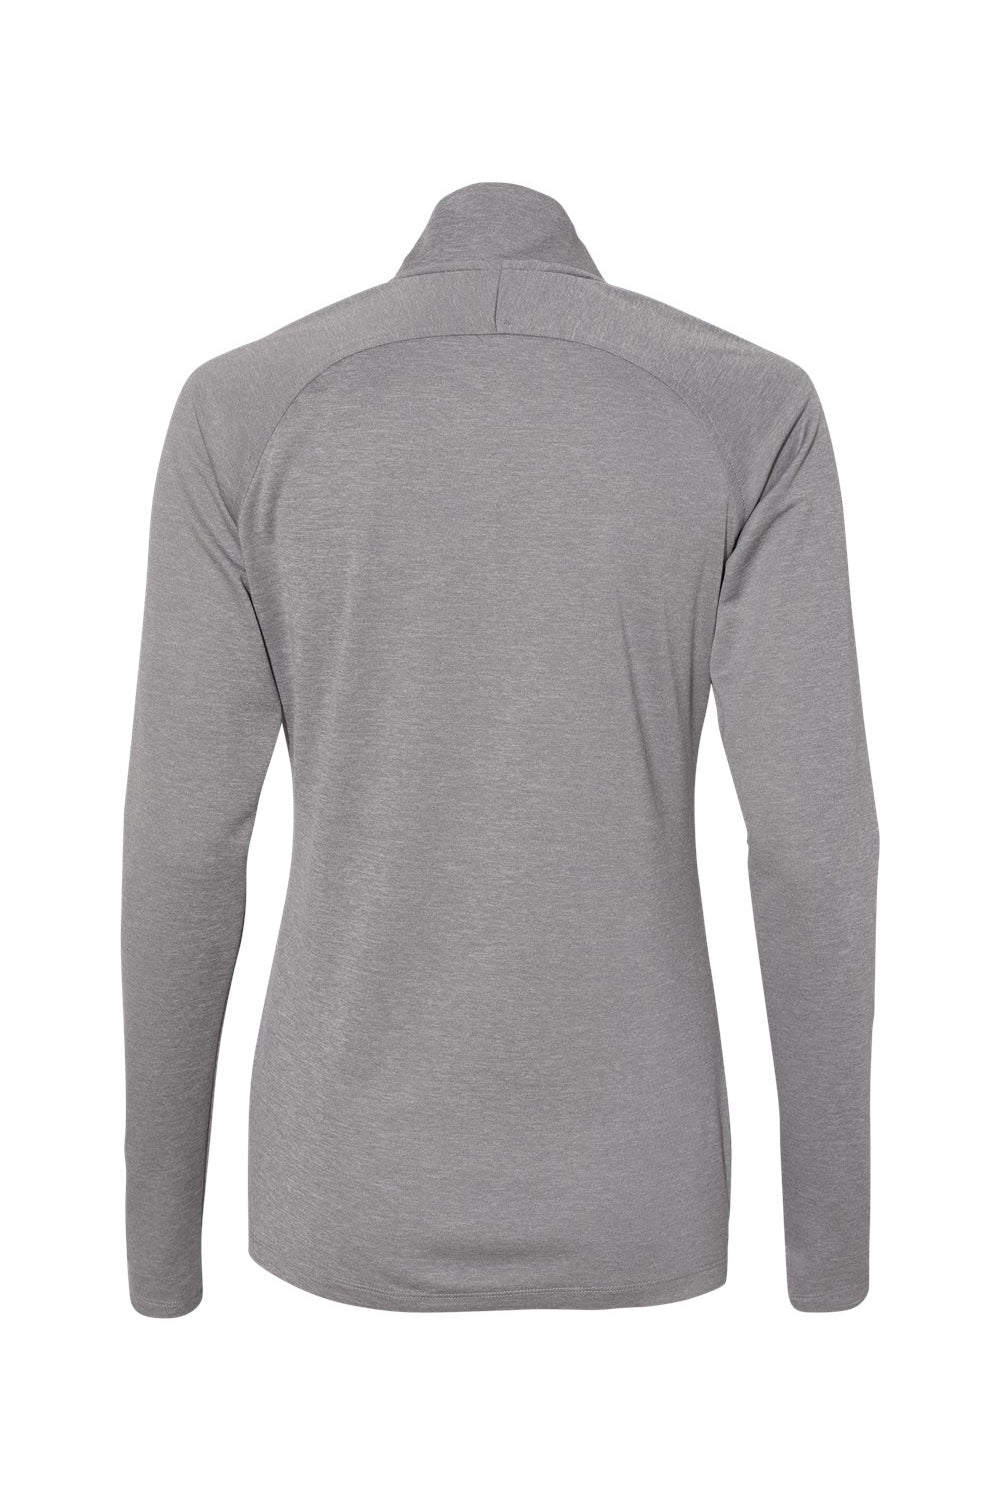 Adidas A281 Womens UPF 50+ 1/4 Zip Sweatshirt Heather Grey/Carbon Grey Flat Back